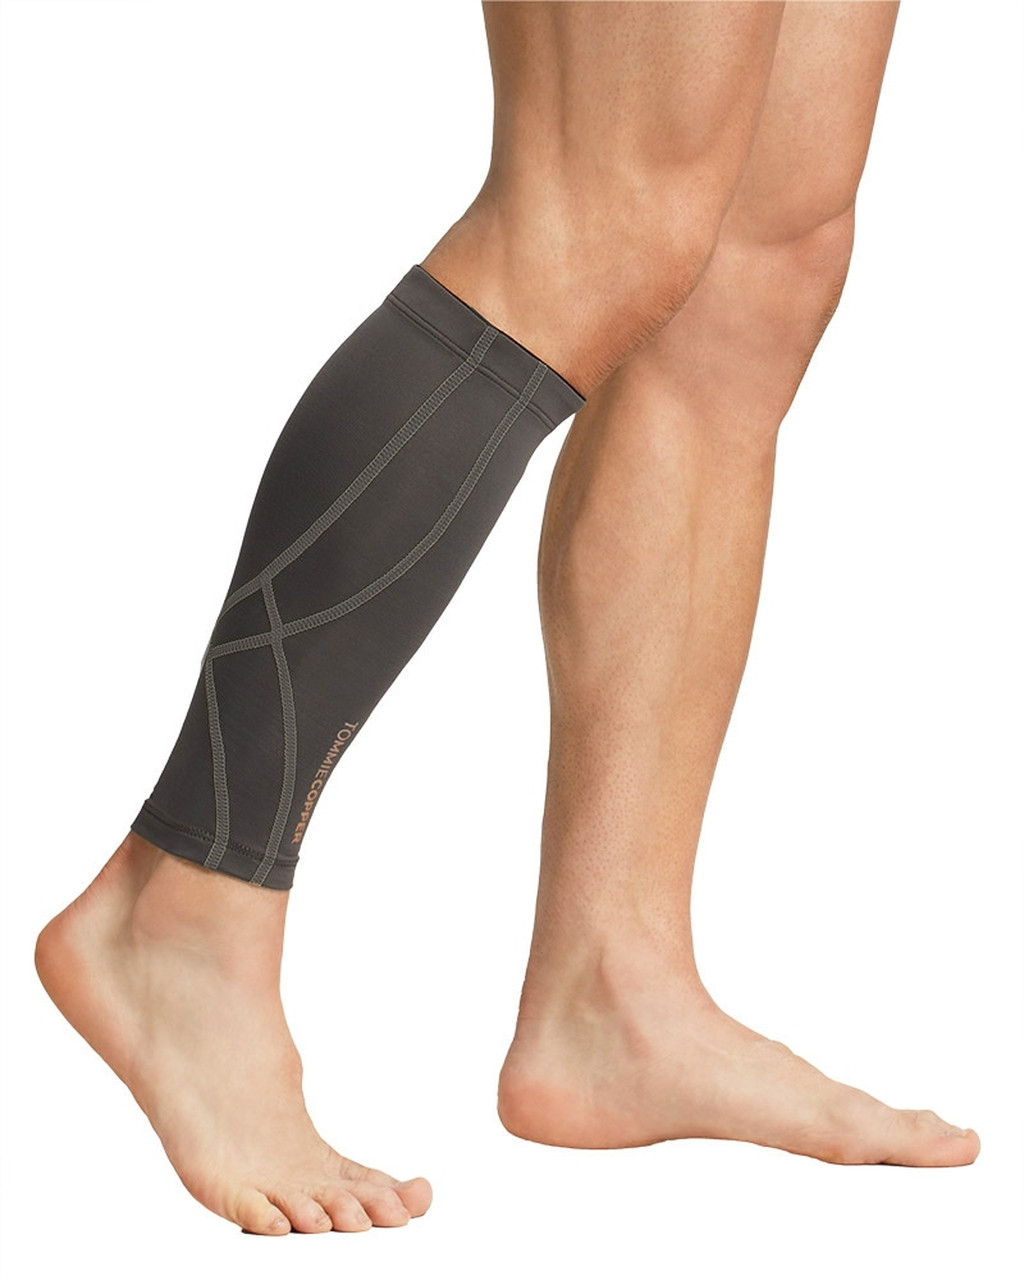 Copper Compression Calf Sleeves for Shin Splints, Varicose Veins,  Arthritis, Sprains, Running, Cycling - Men & Women - 1 Pair